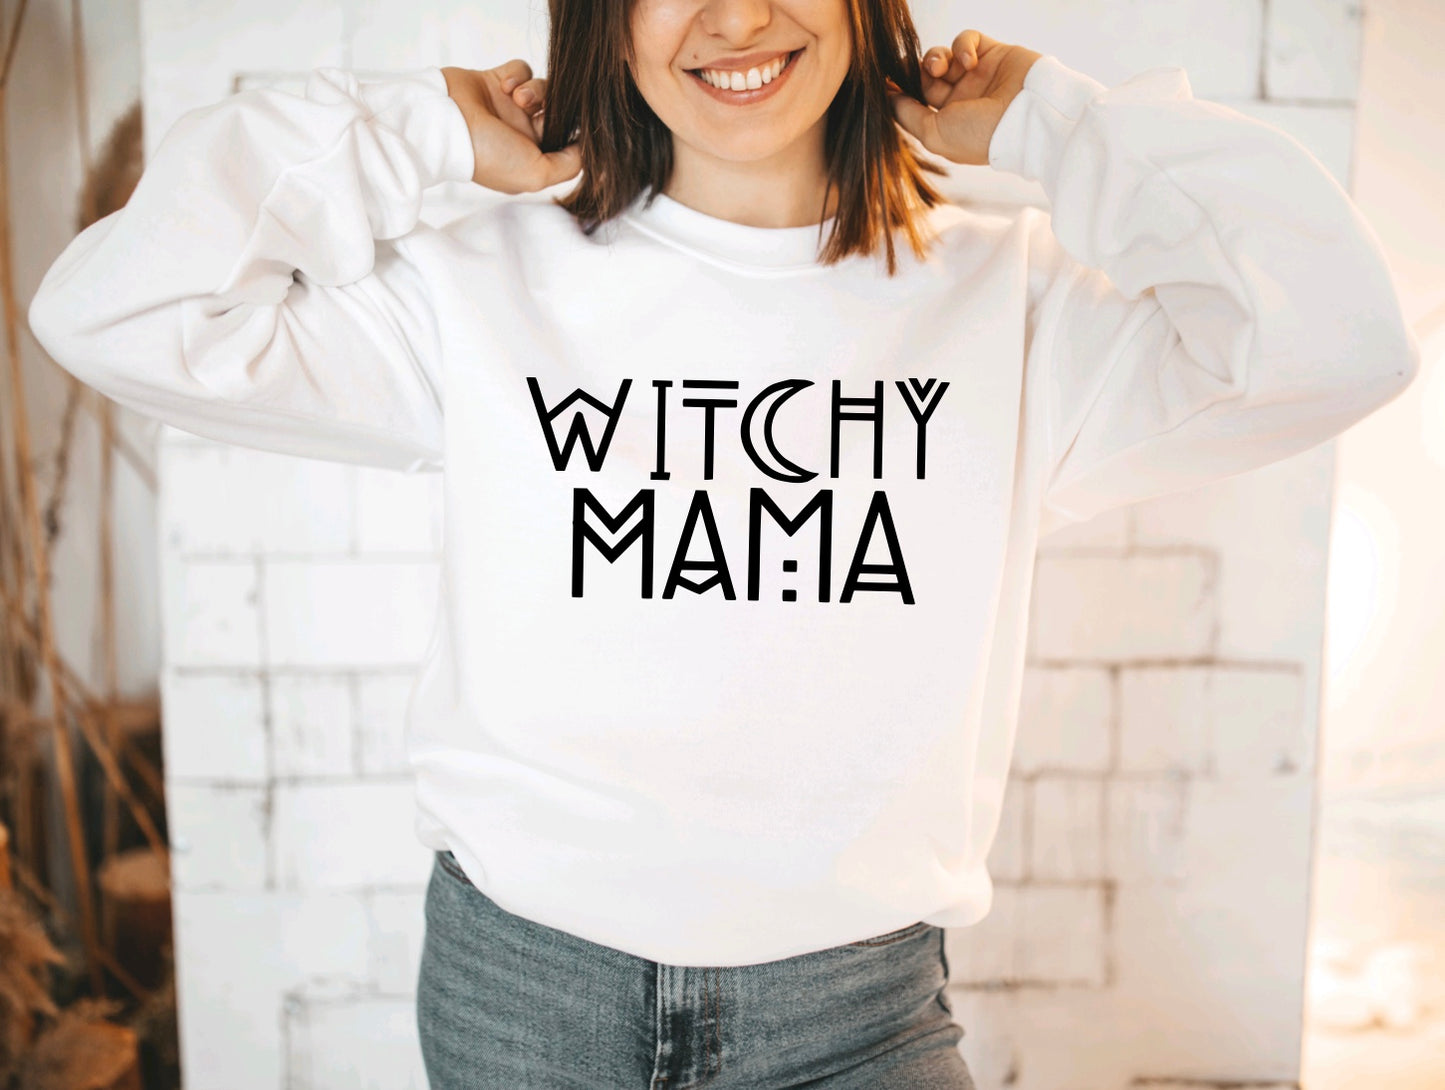 Witchy mama crewneck sweatshirt